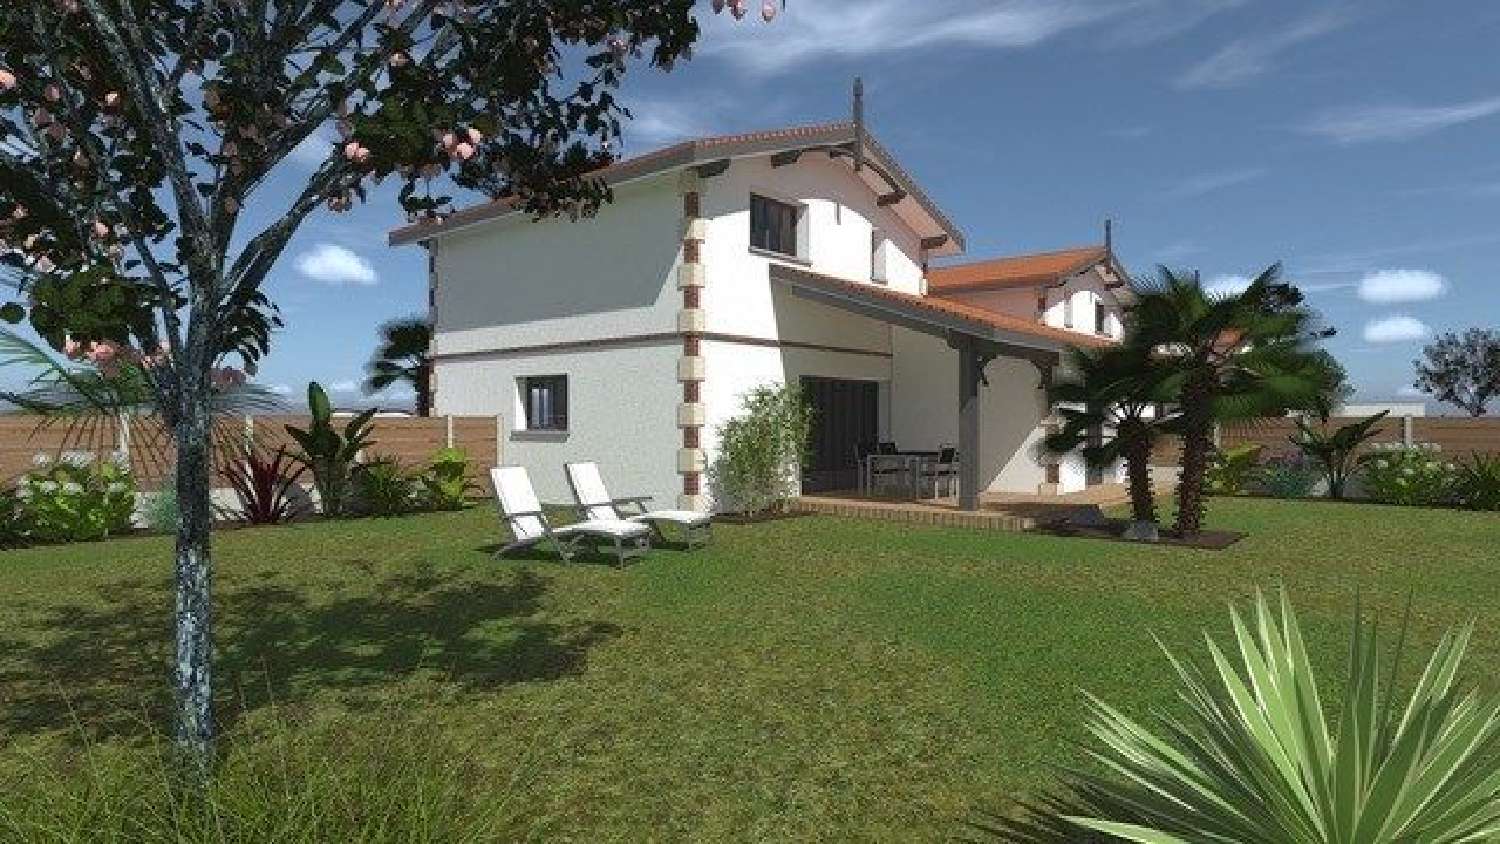  à vendre maison Andernos-les-Bains Gironde 1